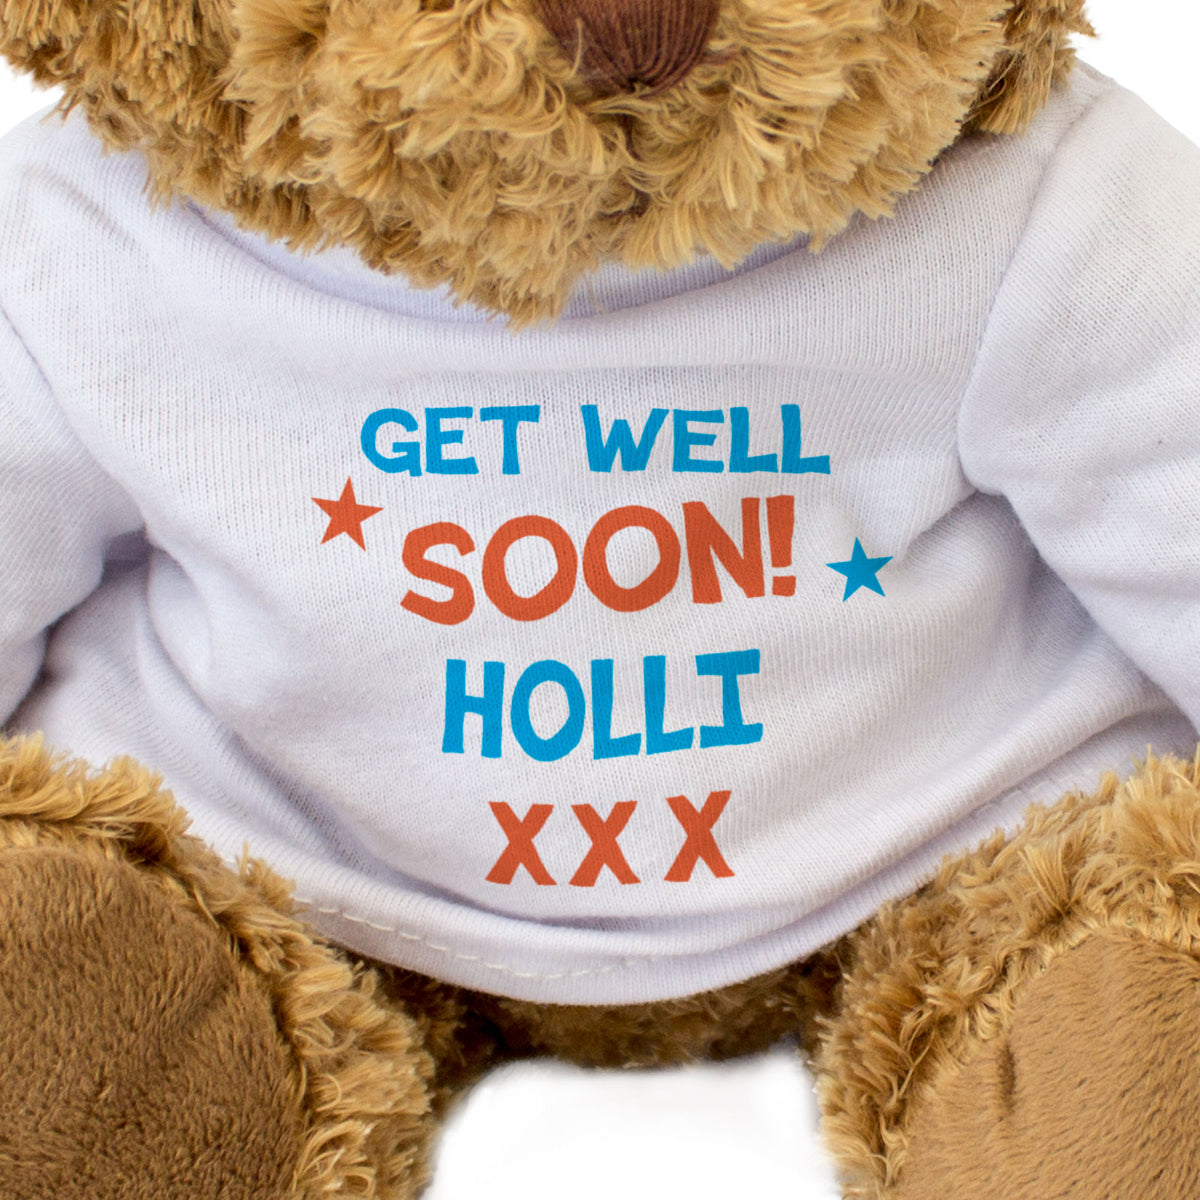 Get Well Soon Holli - Teddy Bear